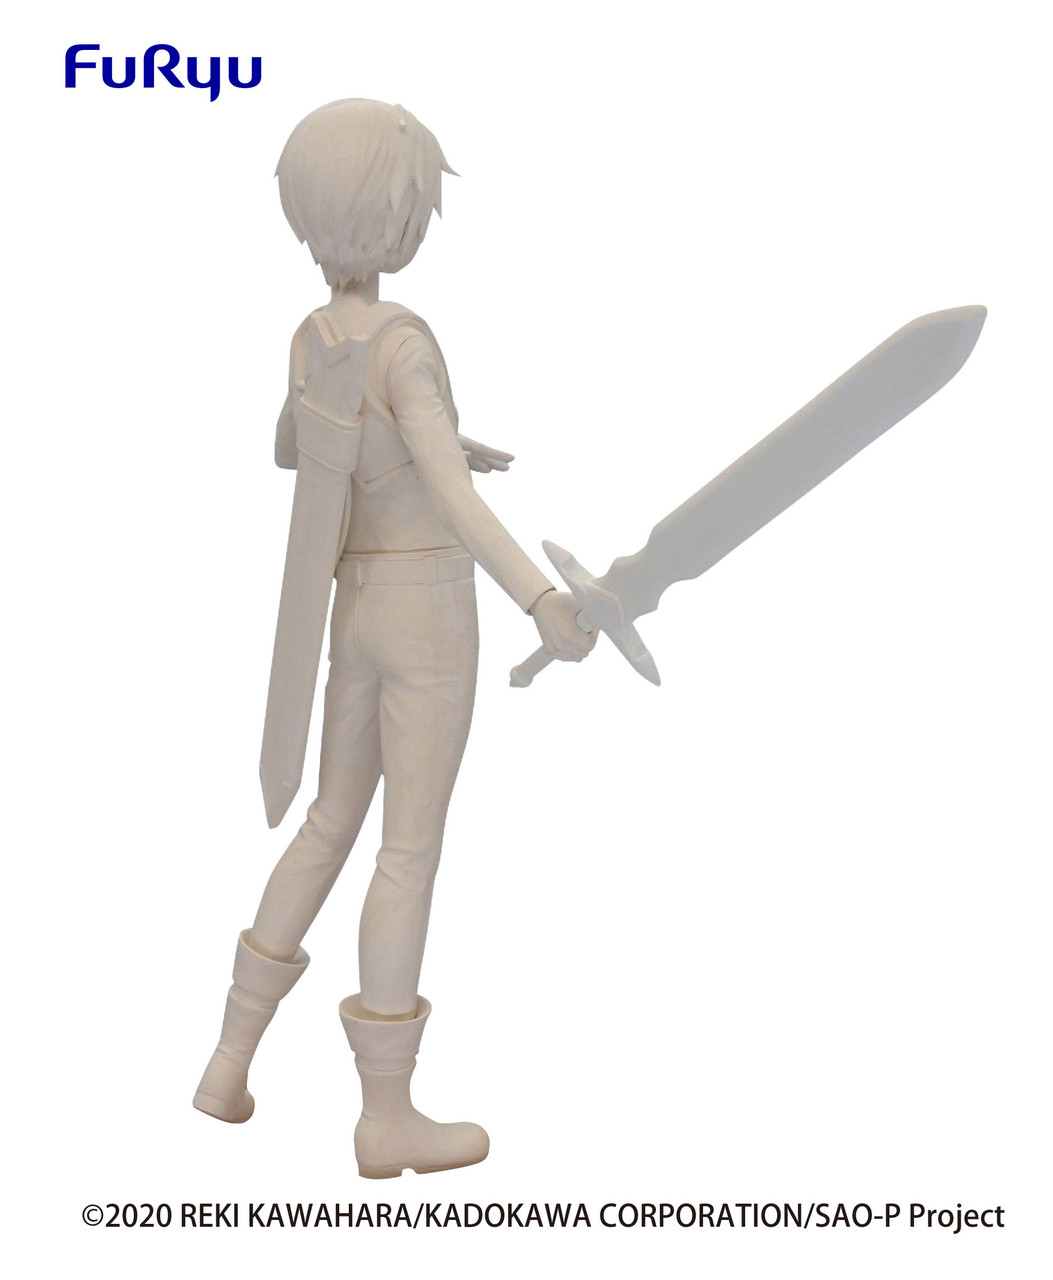 Kirito A Sword Art Online The Movie Ordinal Scale Banpresto - Kirito